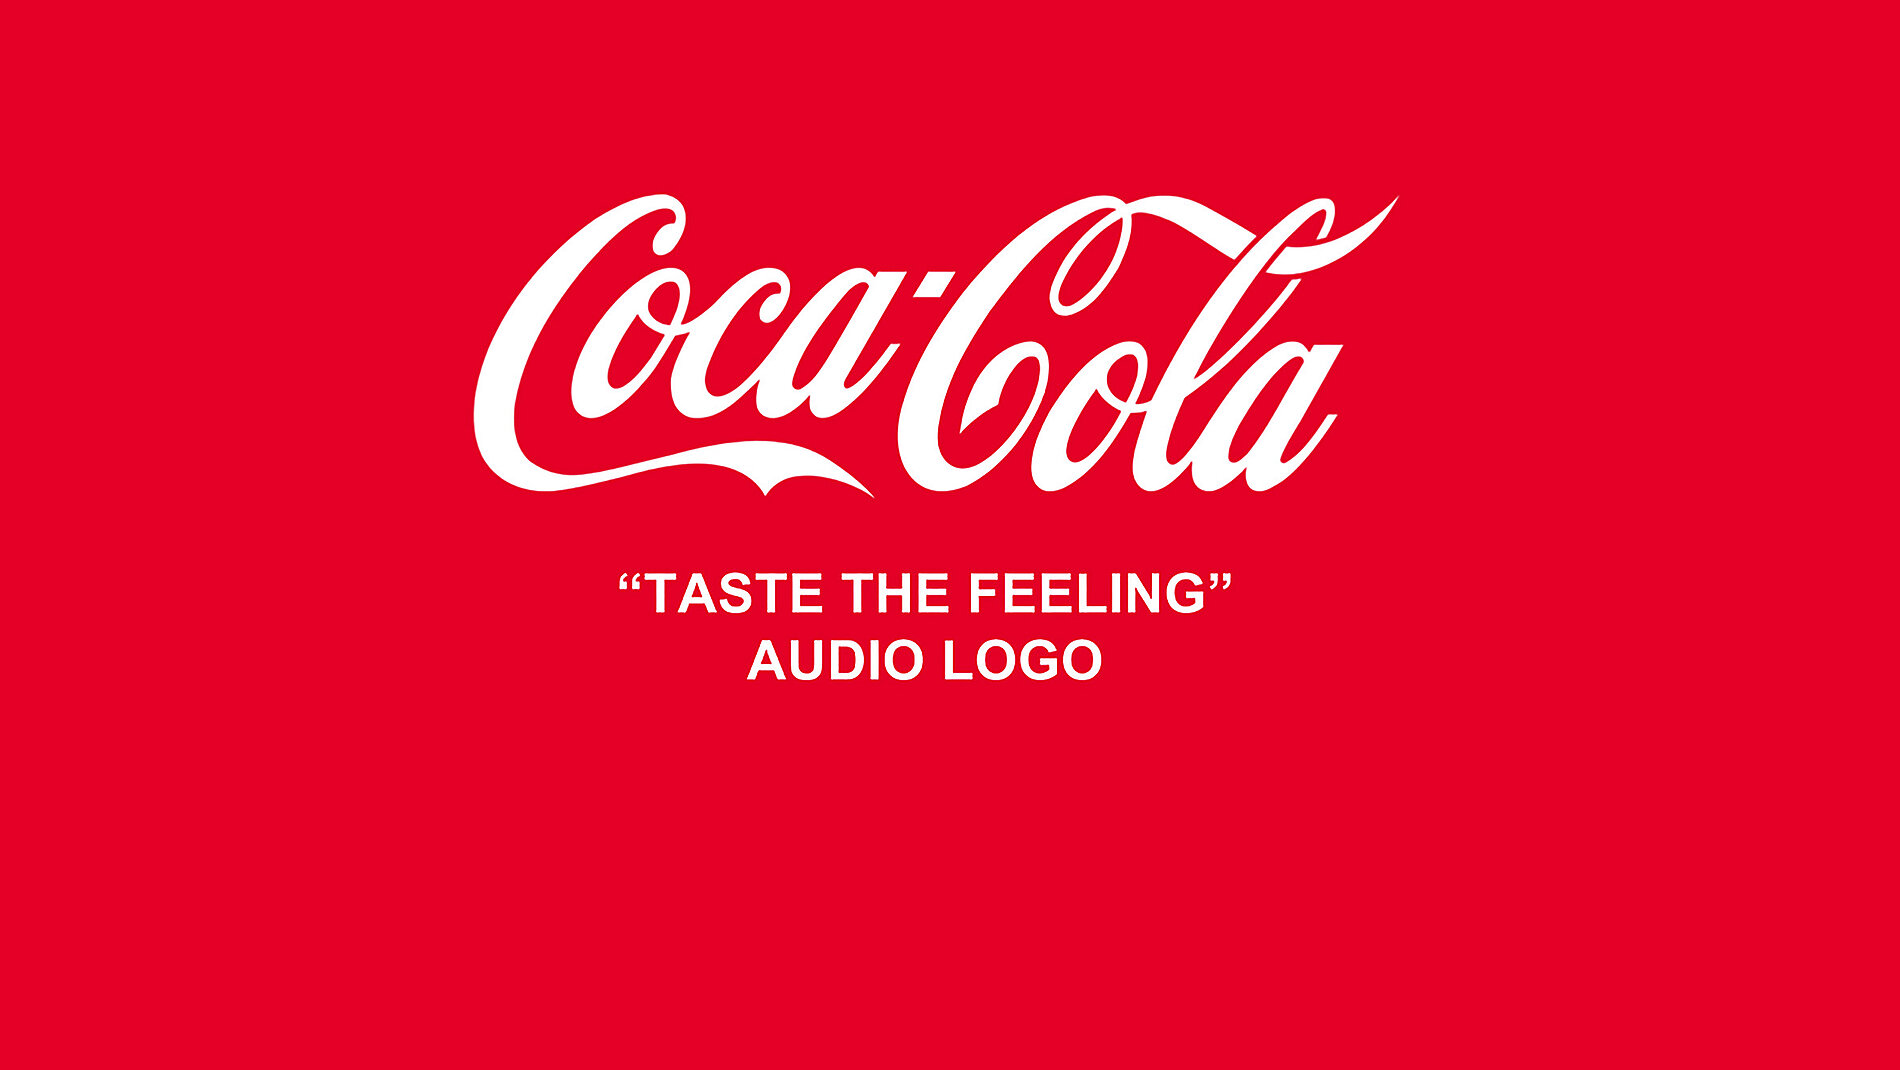 Taste the feeling. Кока кола лейбл. Coca Cola на Красном фоне. Этикетка Кока колы. Надпись Кока кола на Красном фоне.